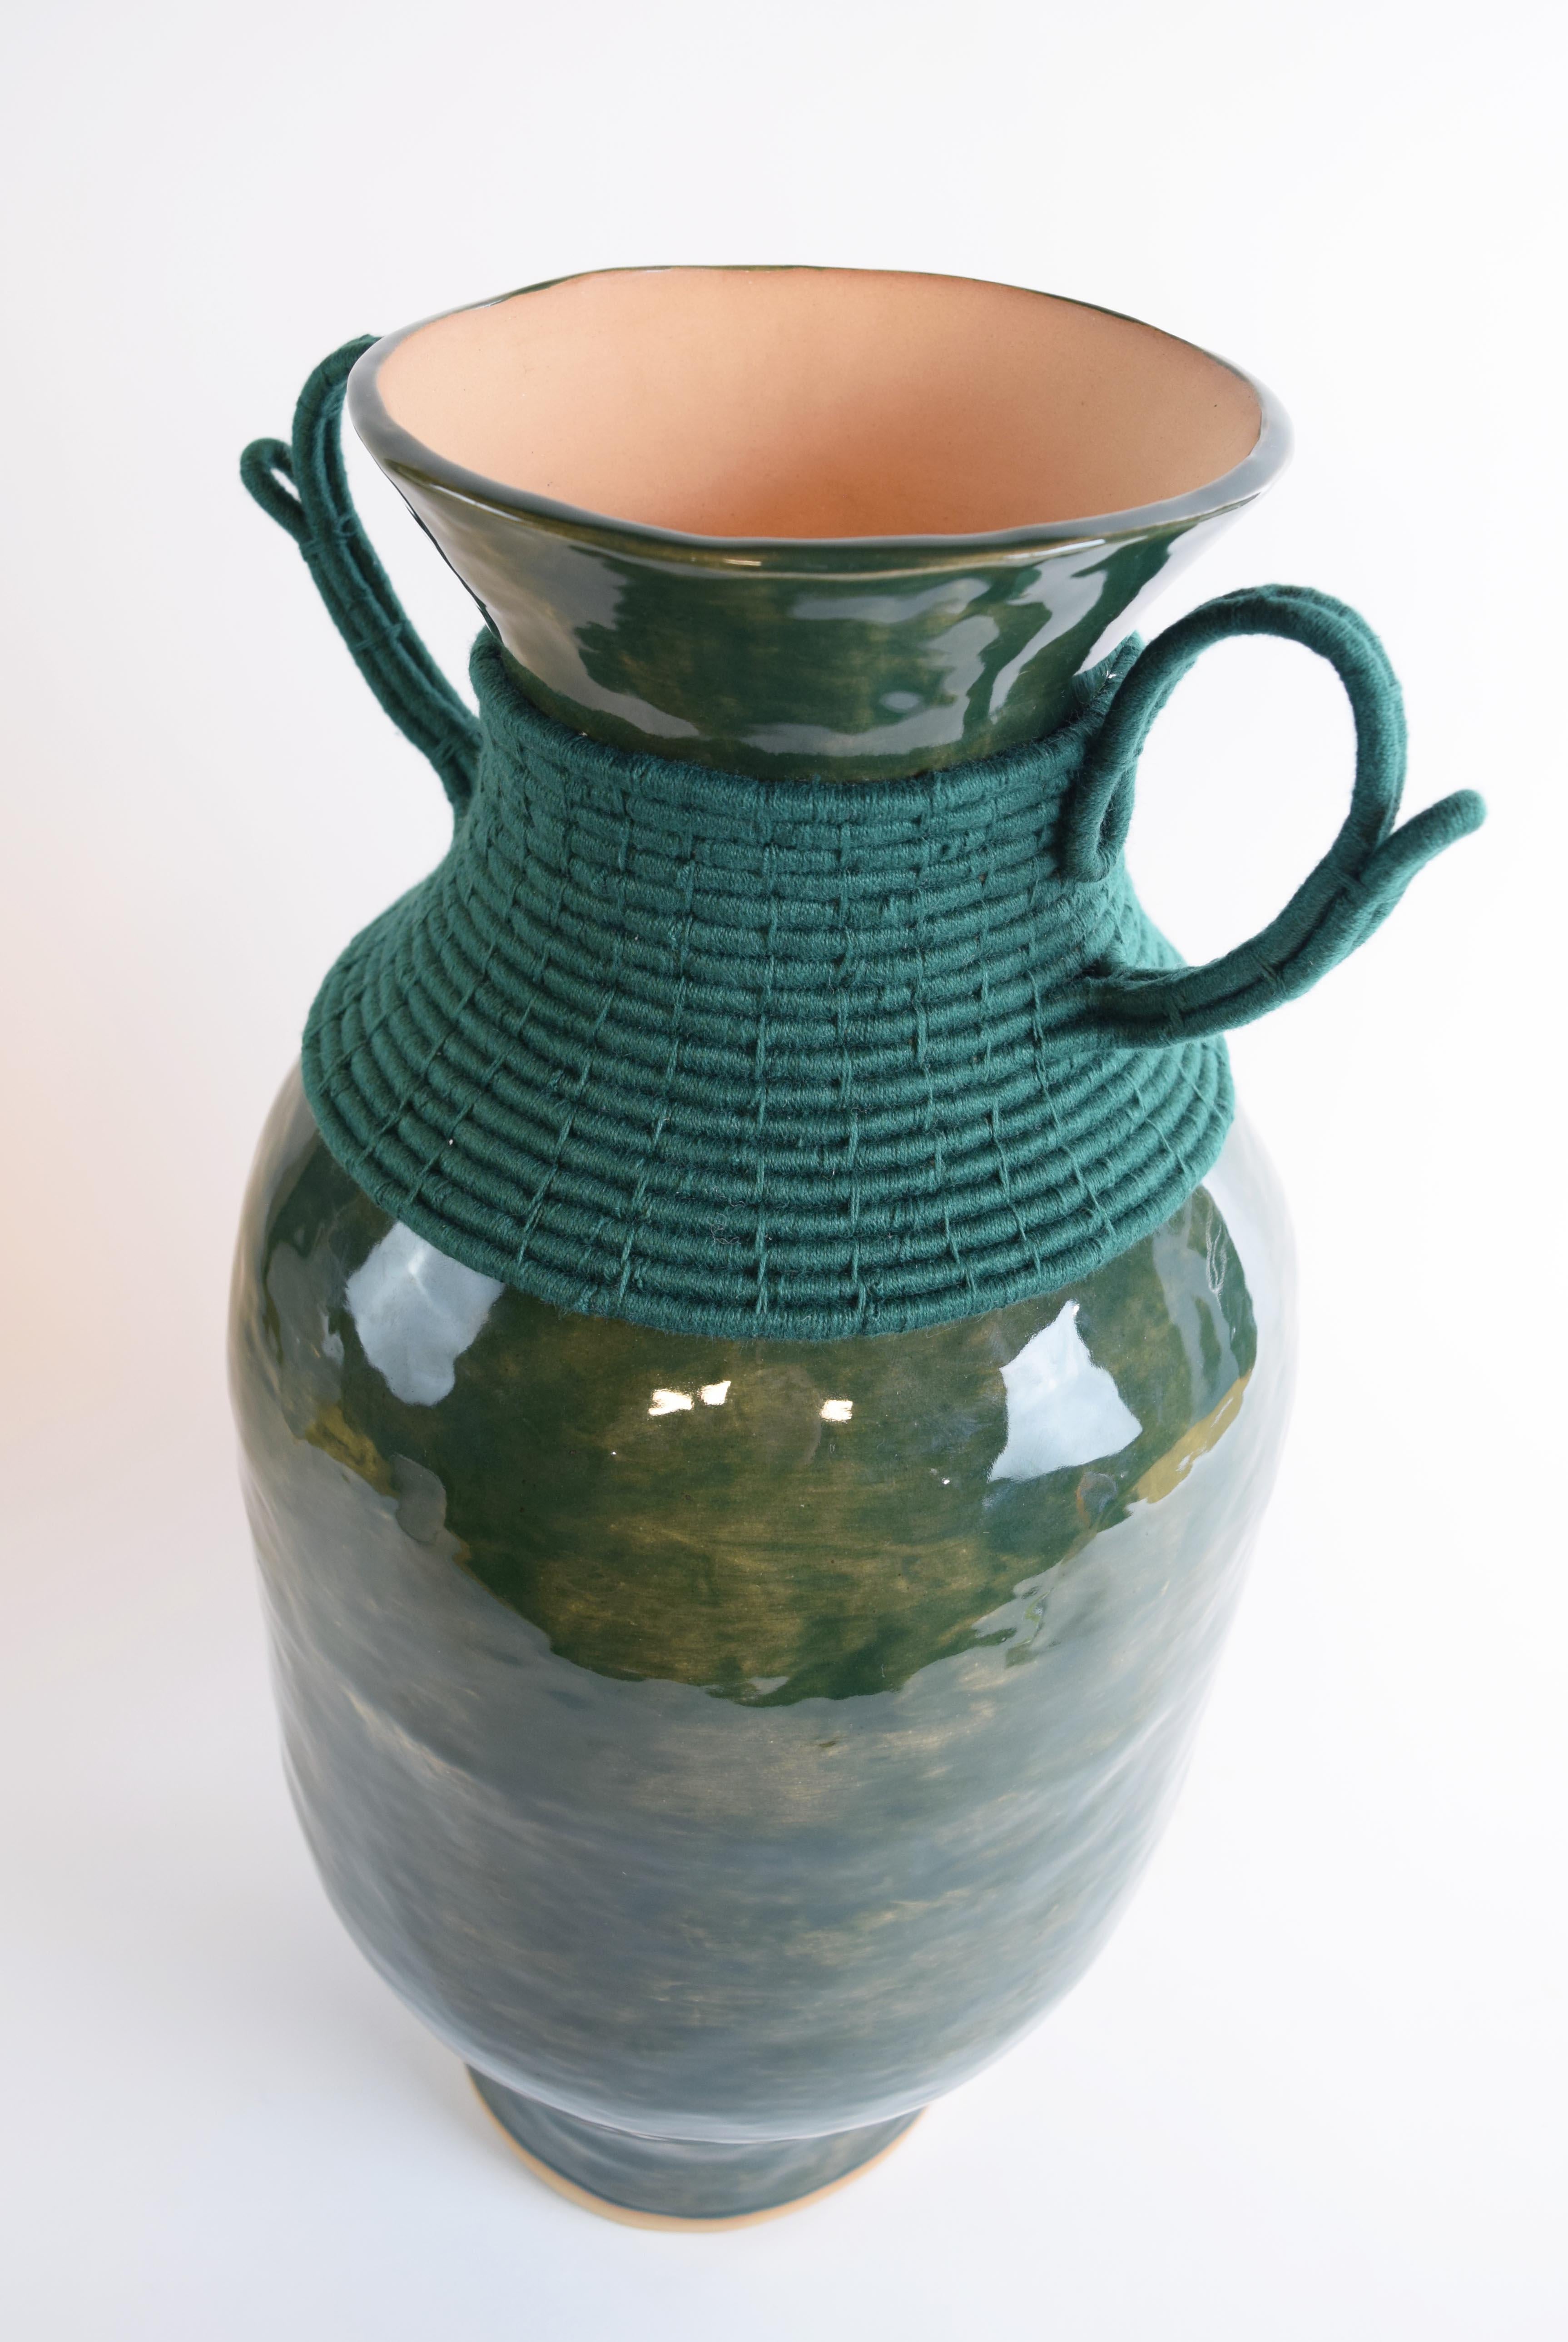 Organic Modern One of a Kind Handmade Ceramic Vase #787, Green Glaze, Woven Green Cotton